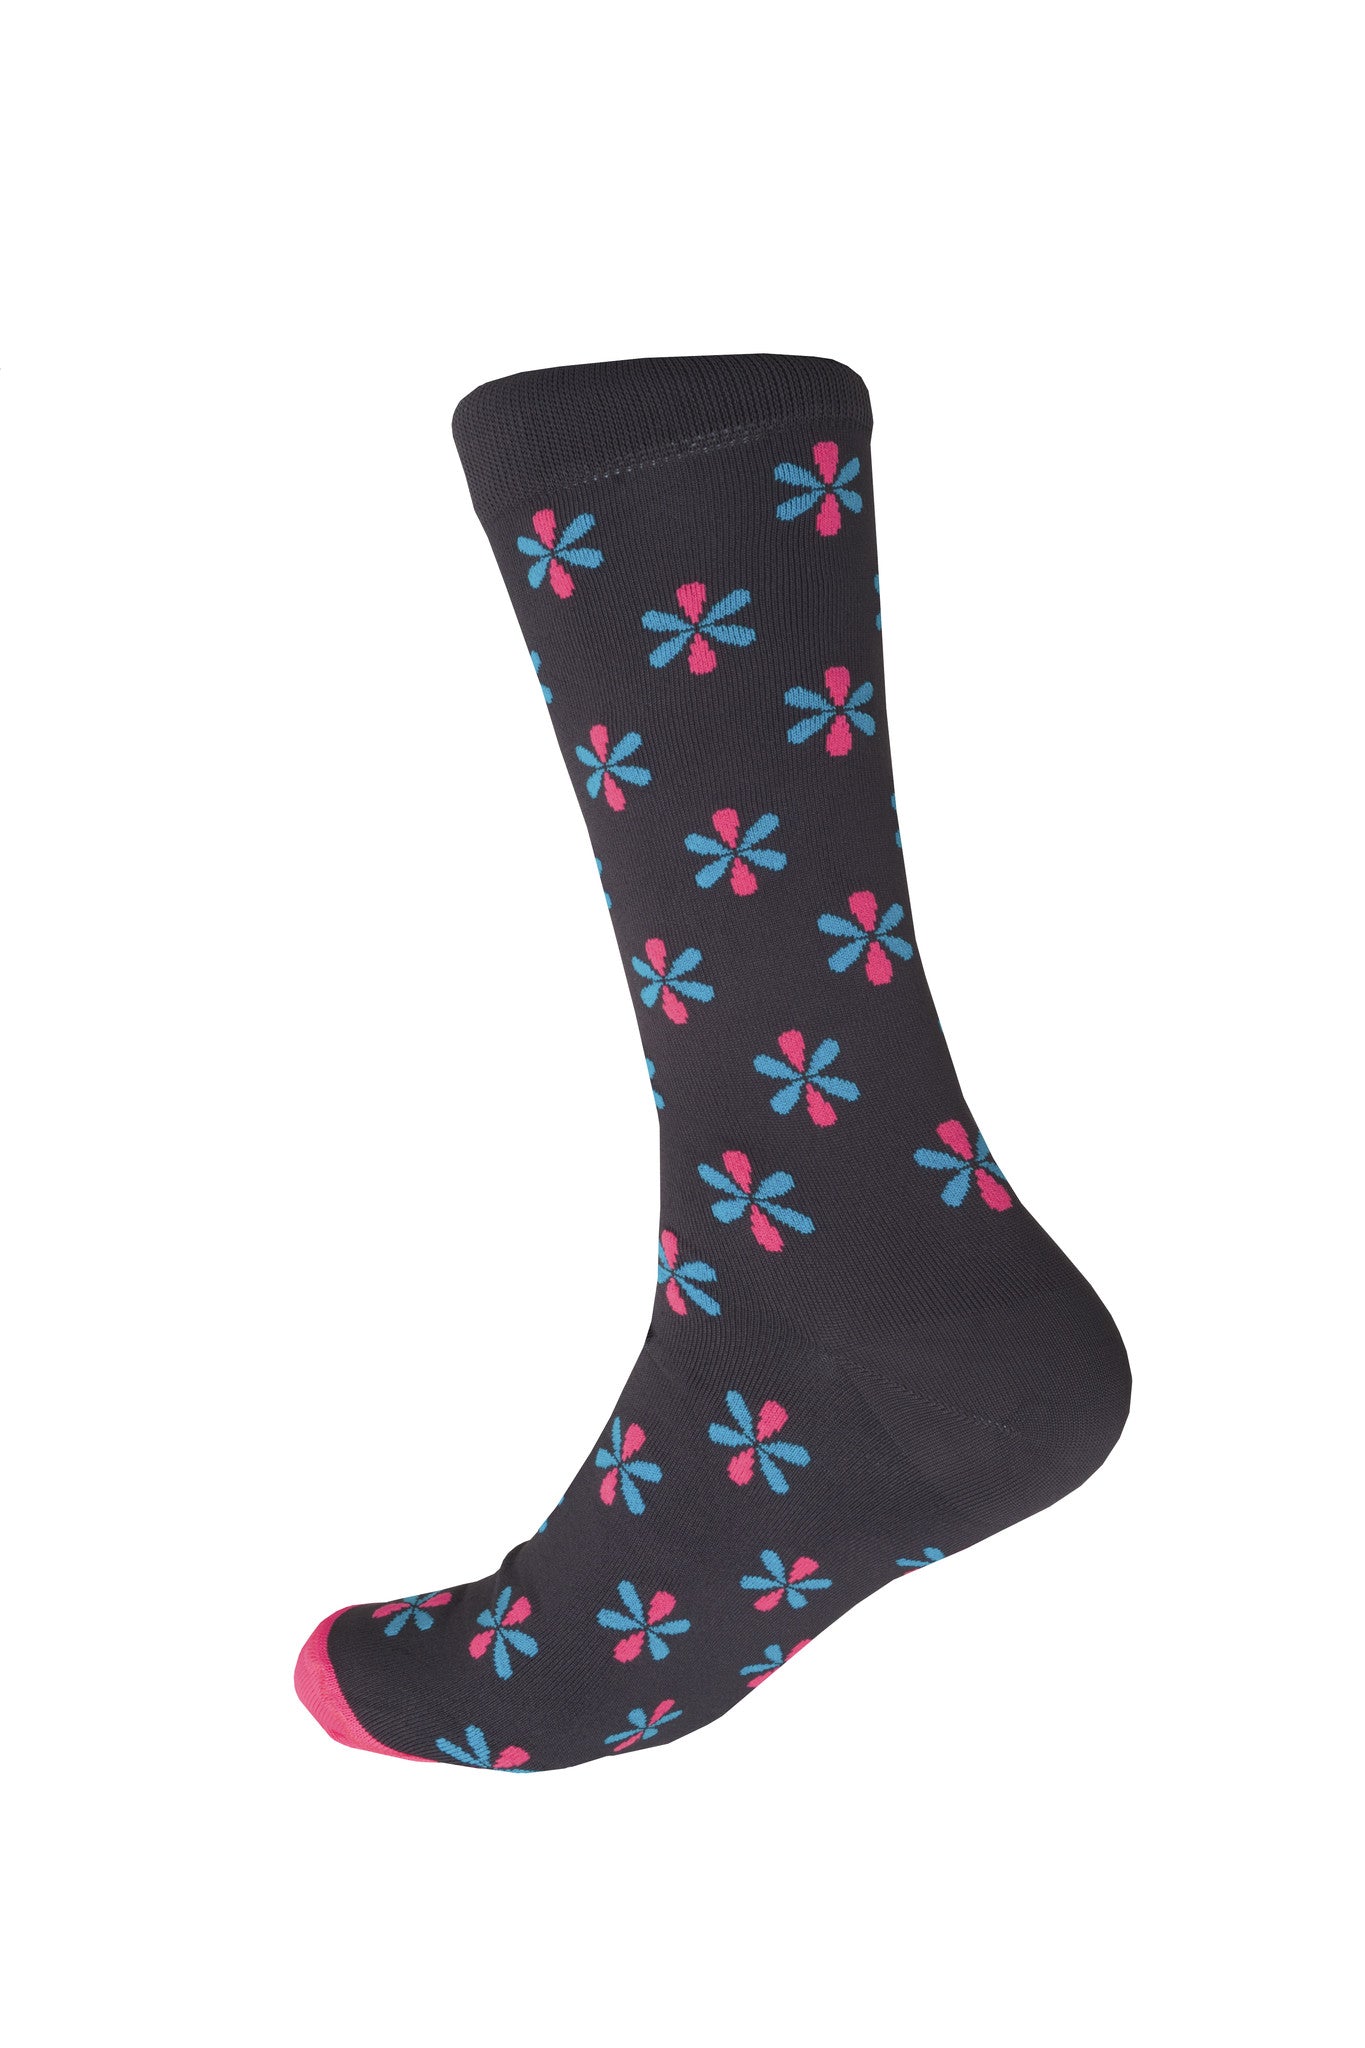 Giraffecool-Giraffe-Cool-Brand-Dark-Grey-Blue-And-Pink-Flowers-Microfiber-Fashion-Socks-Back